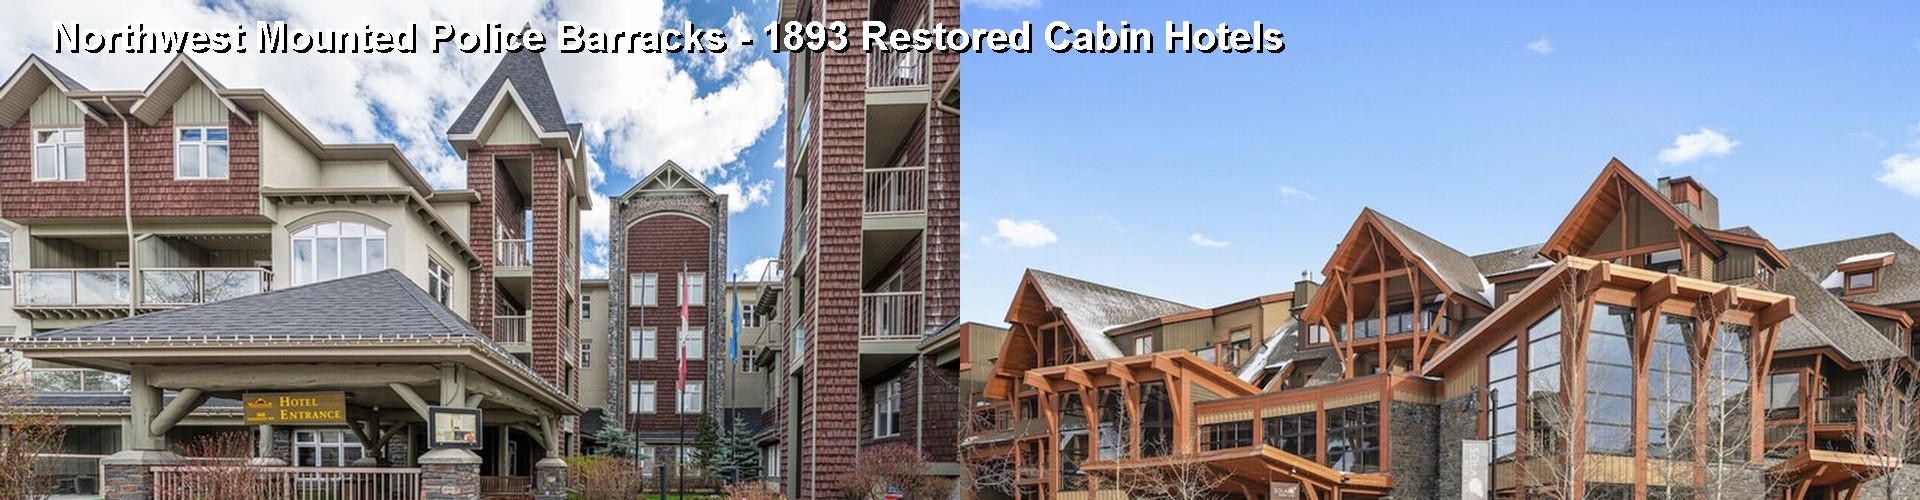 5 Best Hotels near Northwest Mounted Police Barracks - 1893 Restored Cabin